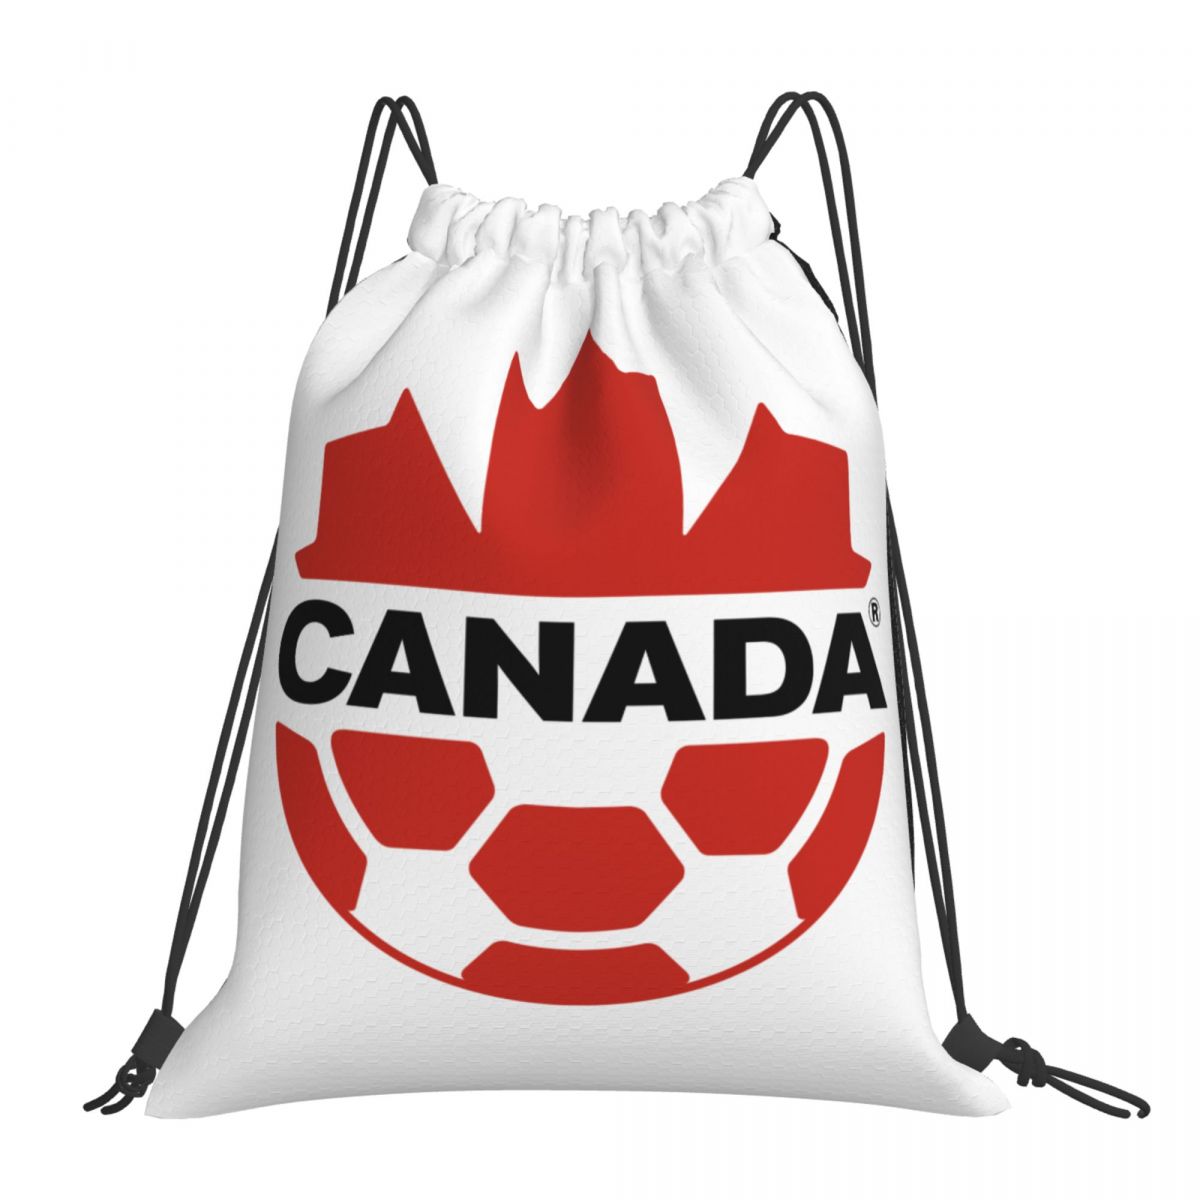 Canada National Football Team Drawstring Bags for School Gym